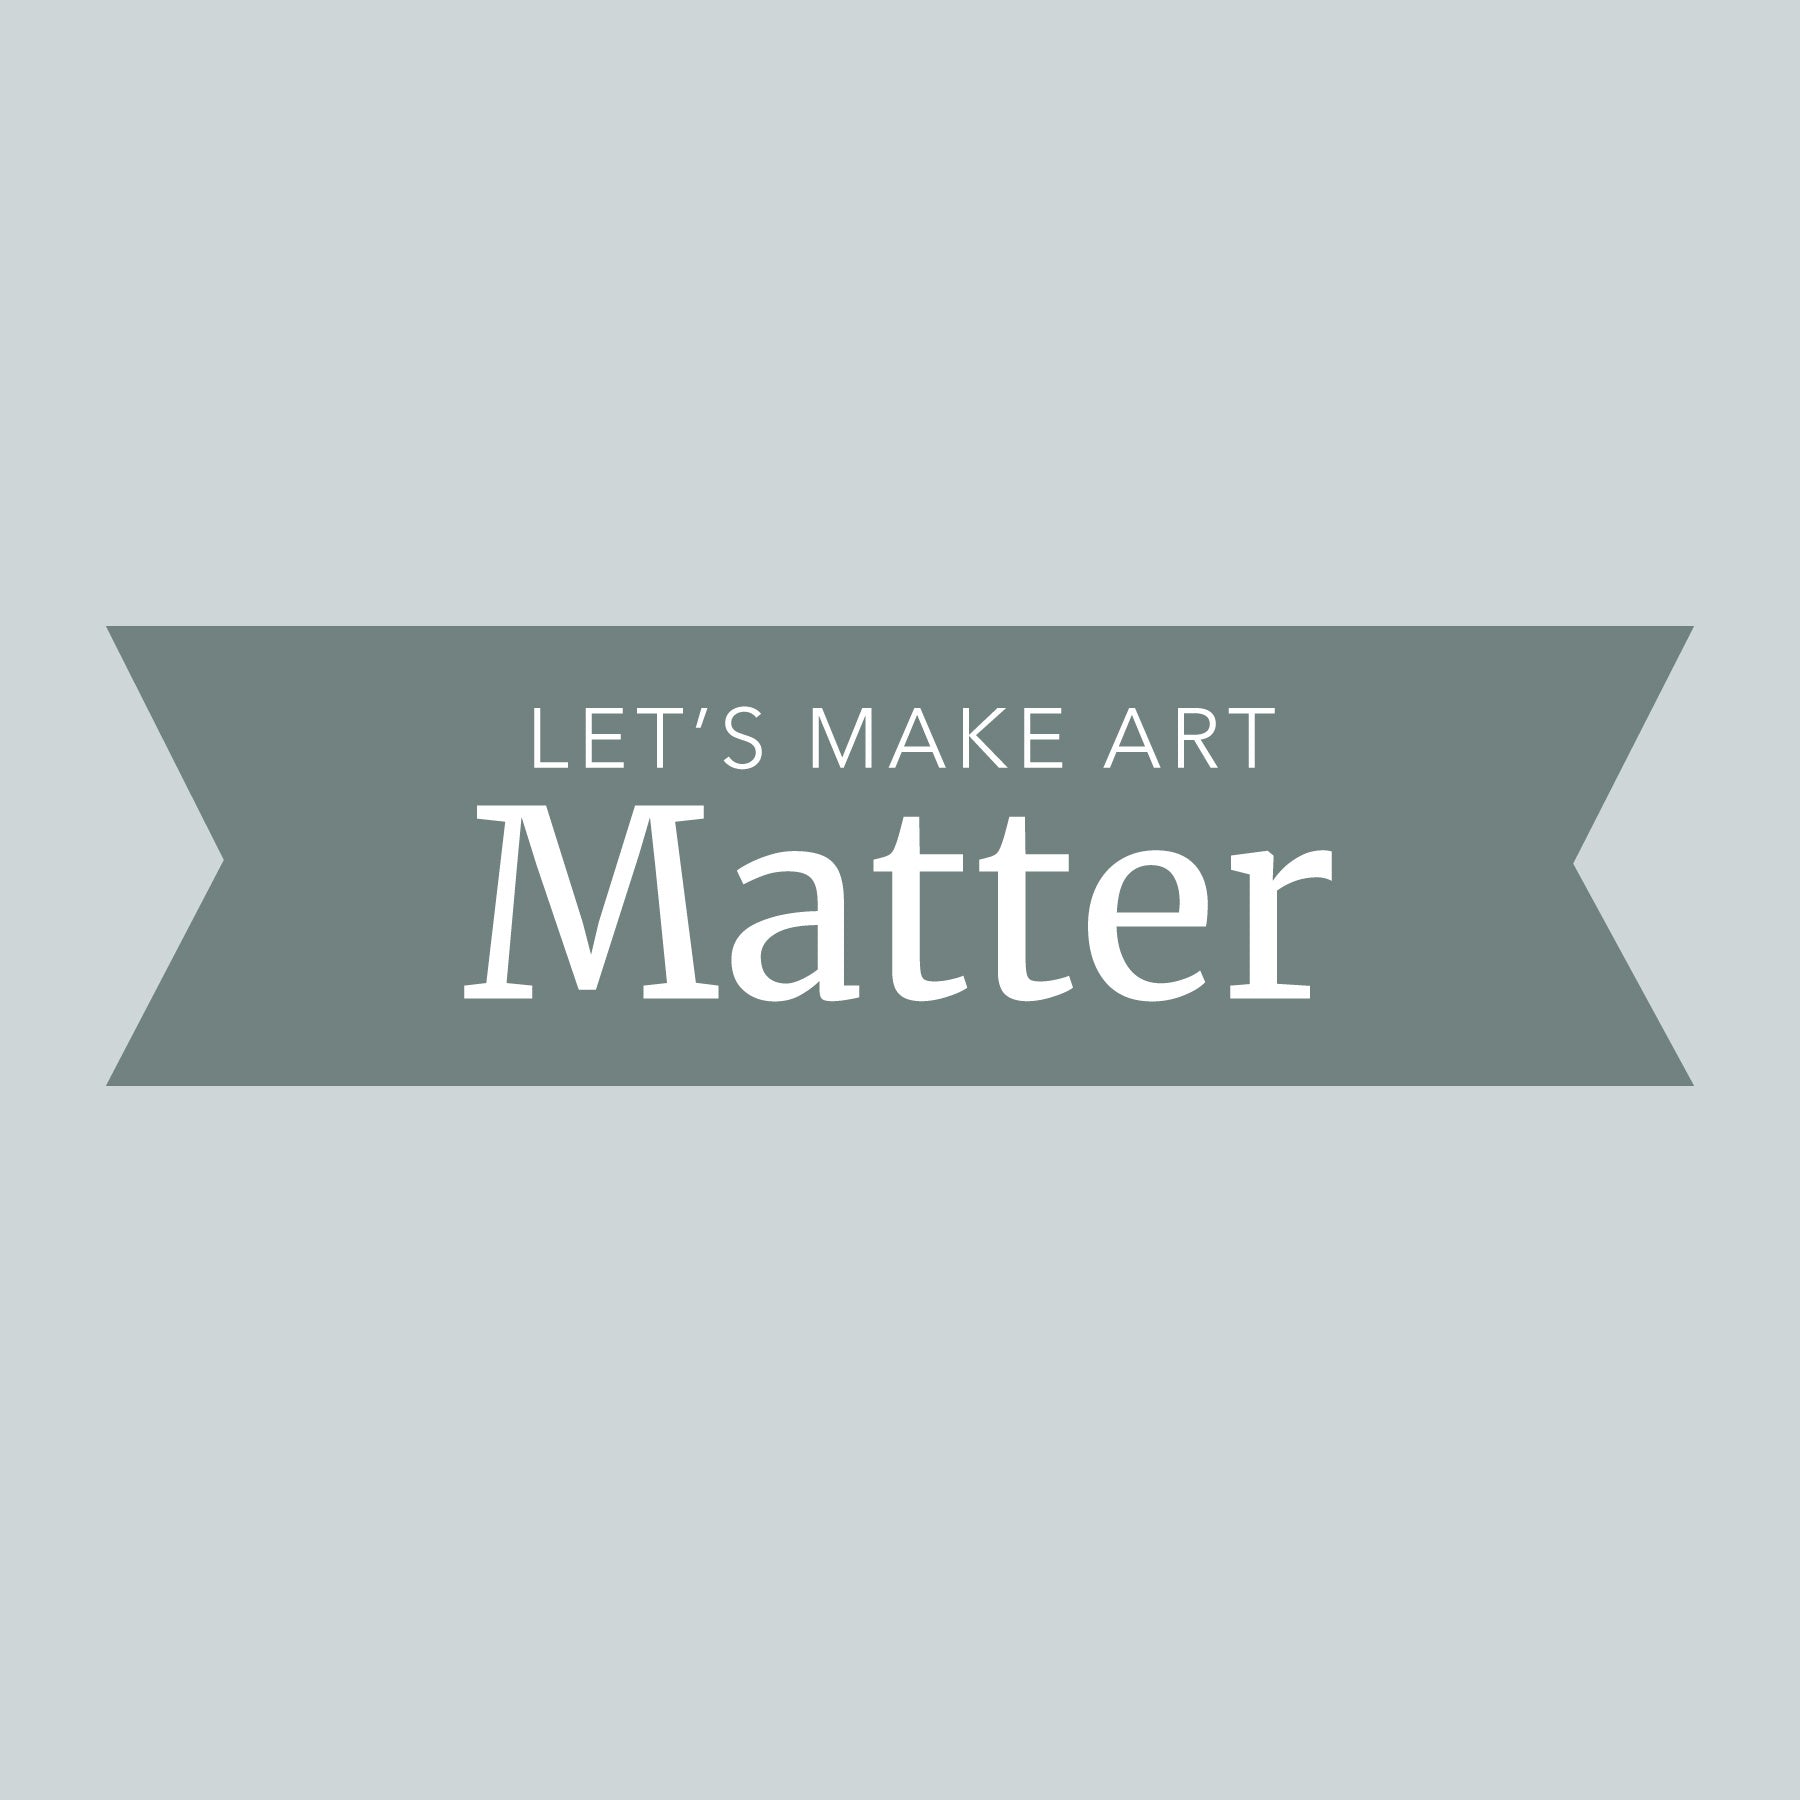 Introducing Let's Make Art Matter